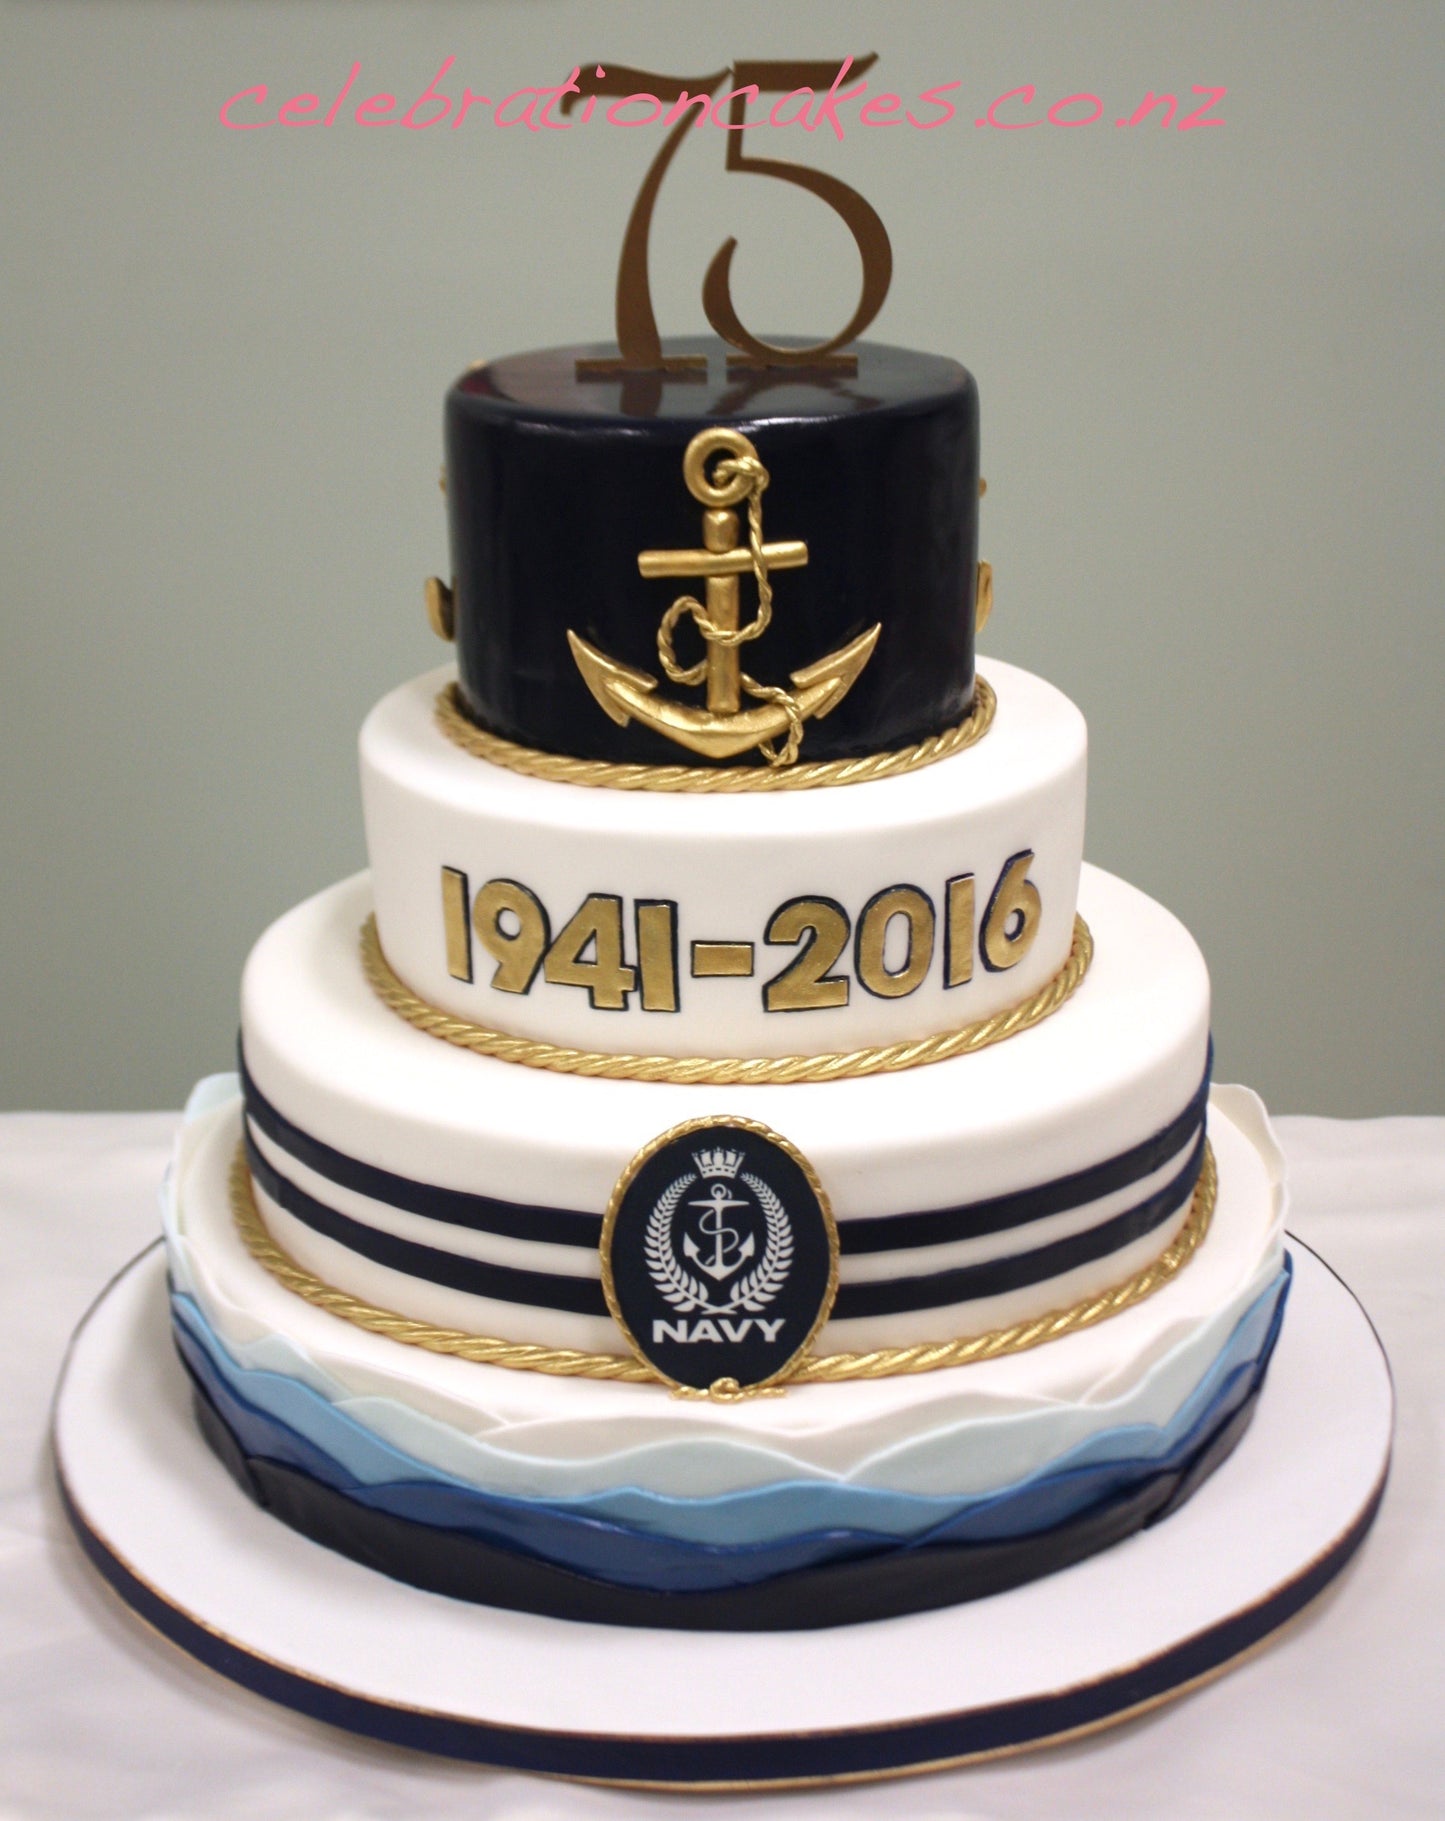 NZ Navy , cake